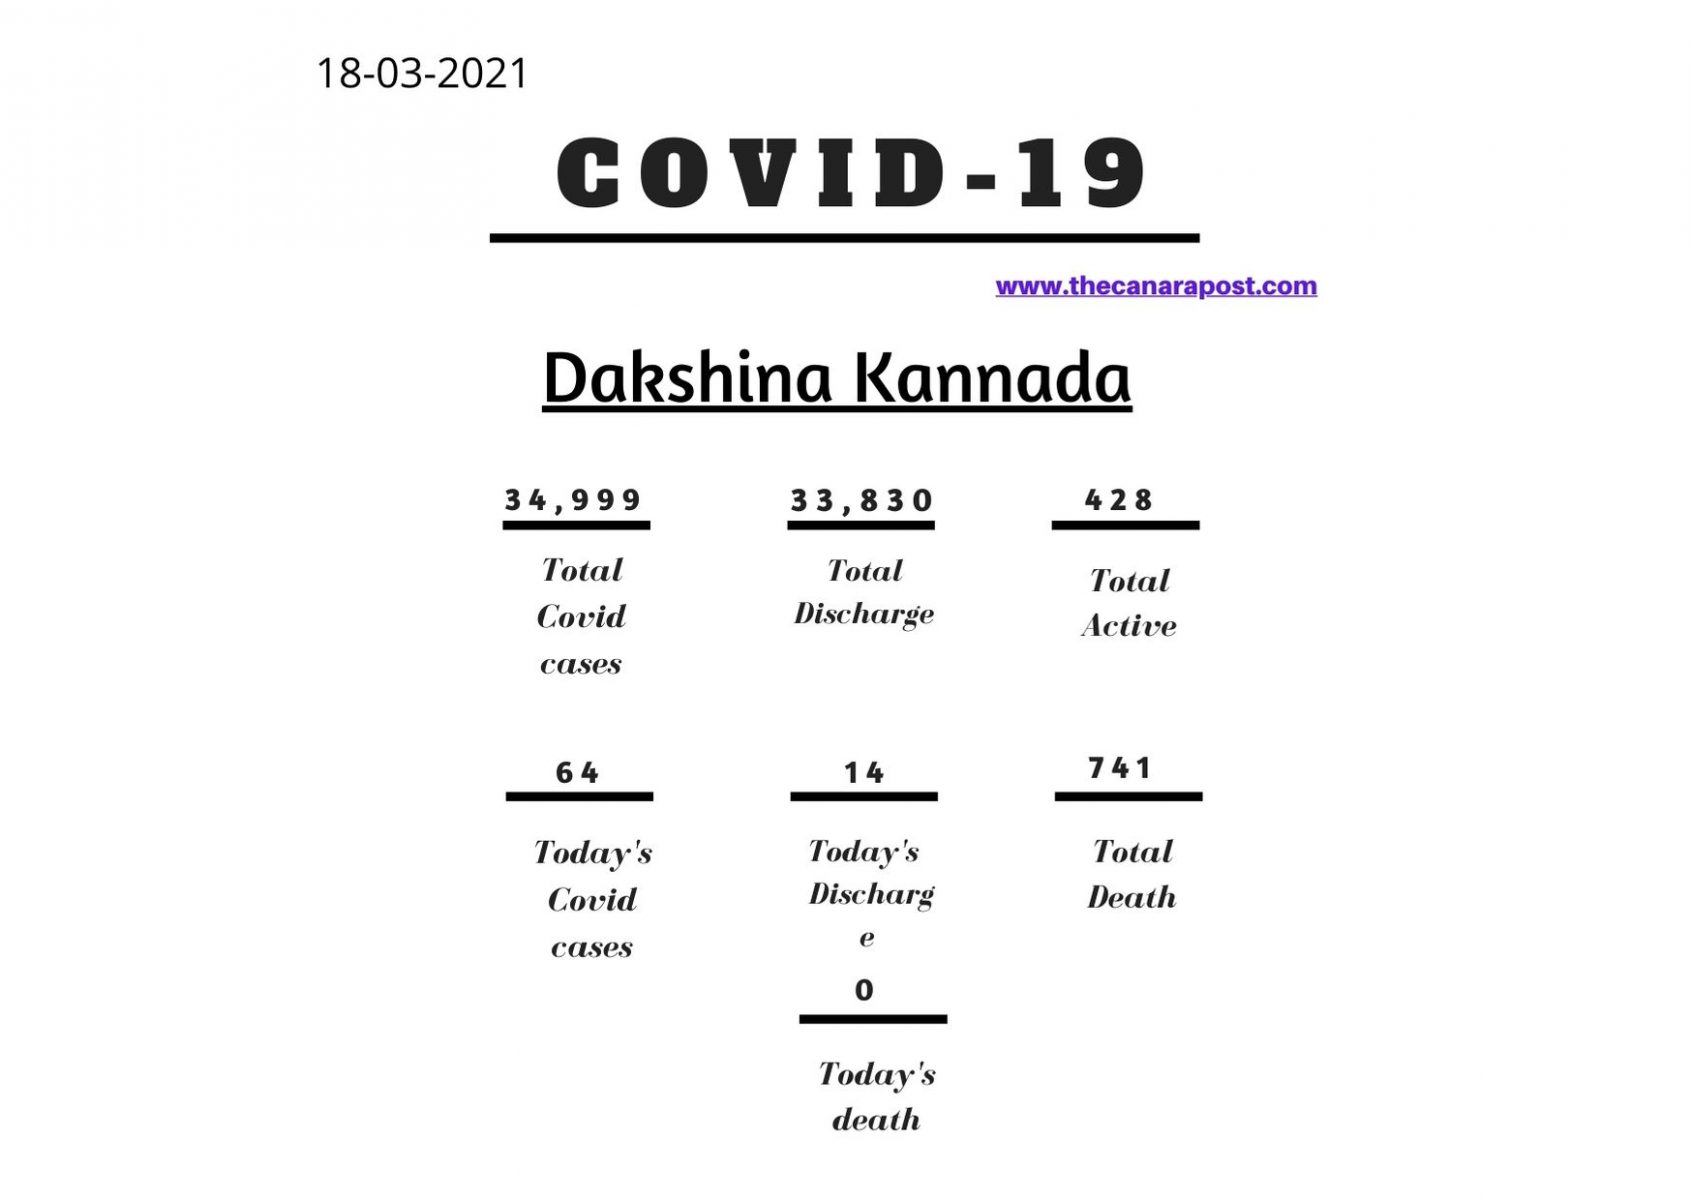 DK Covid Data